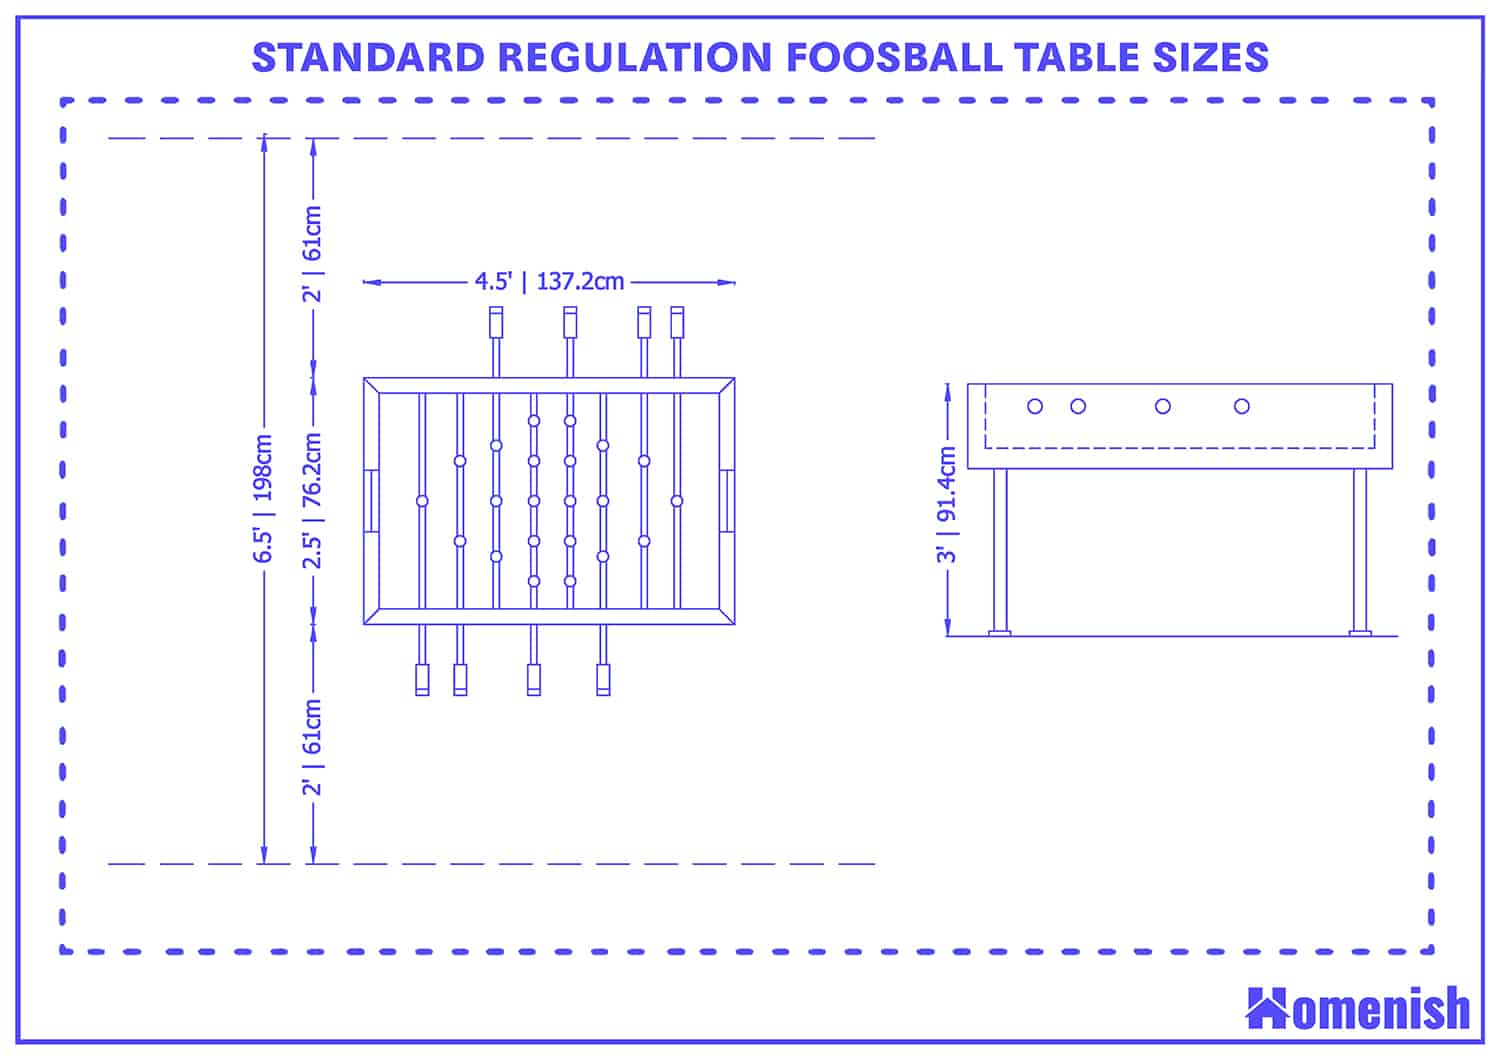 Standard Regulation Foosball Table Sizes